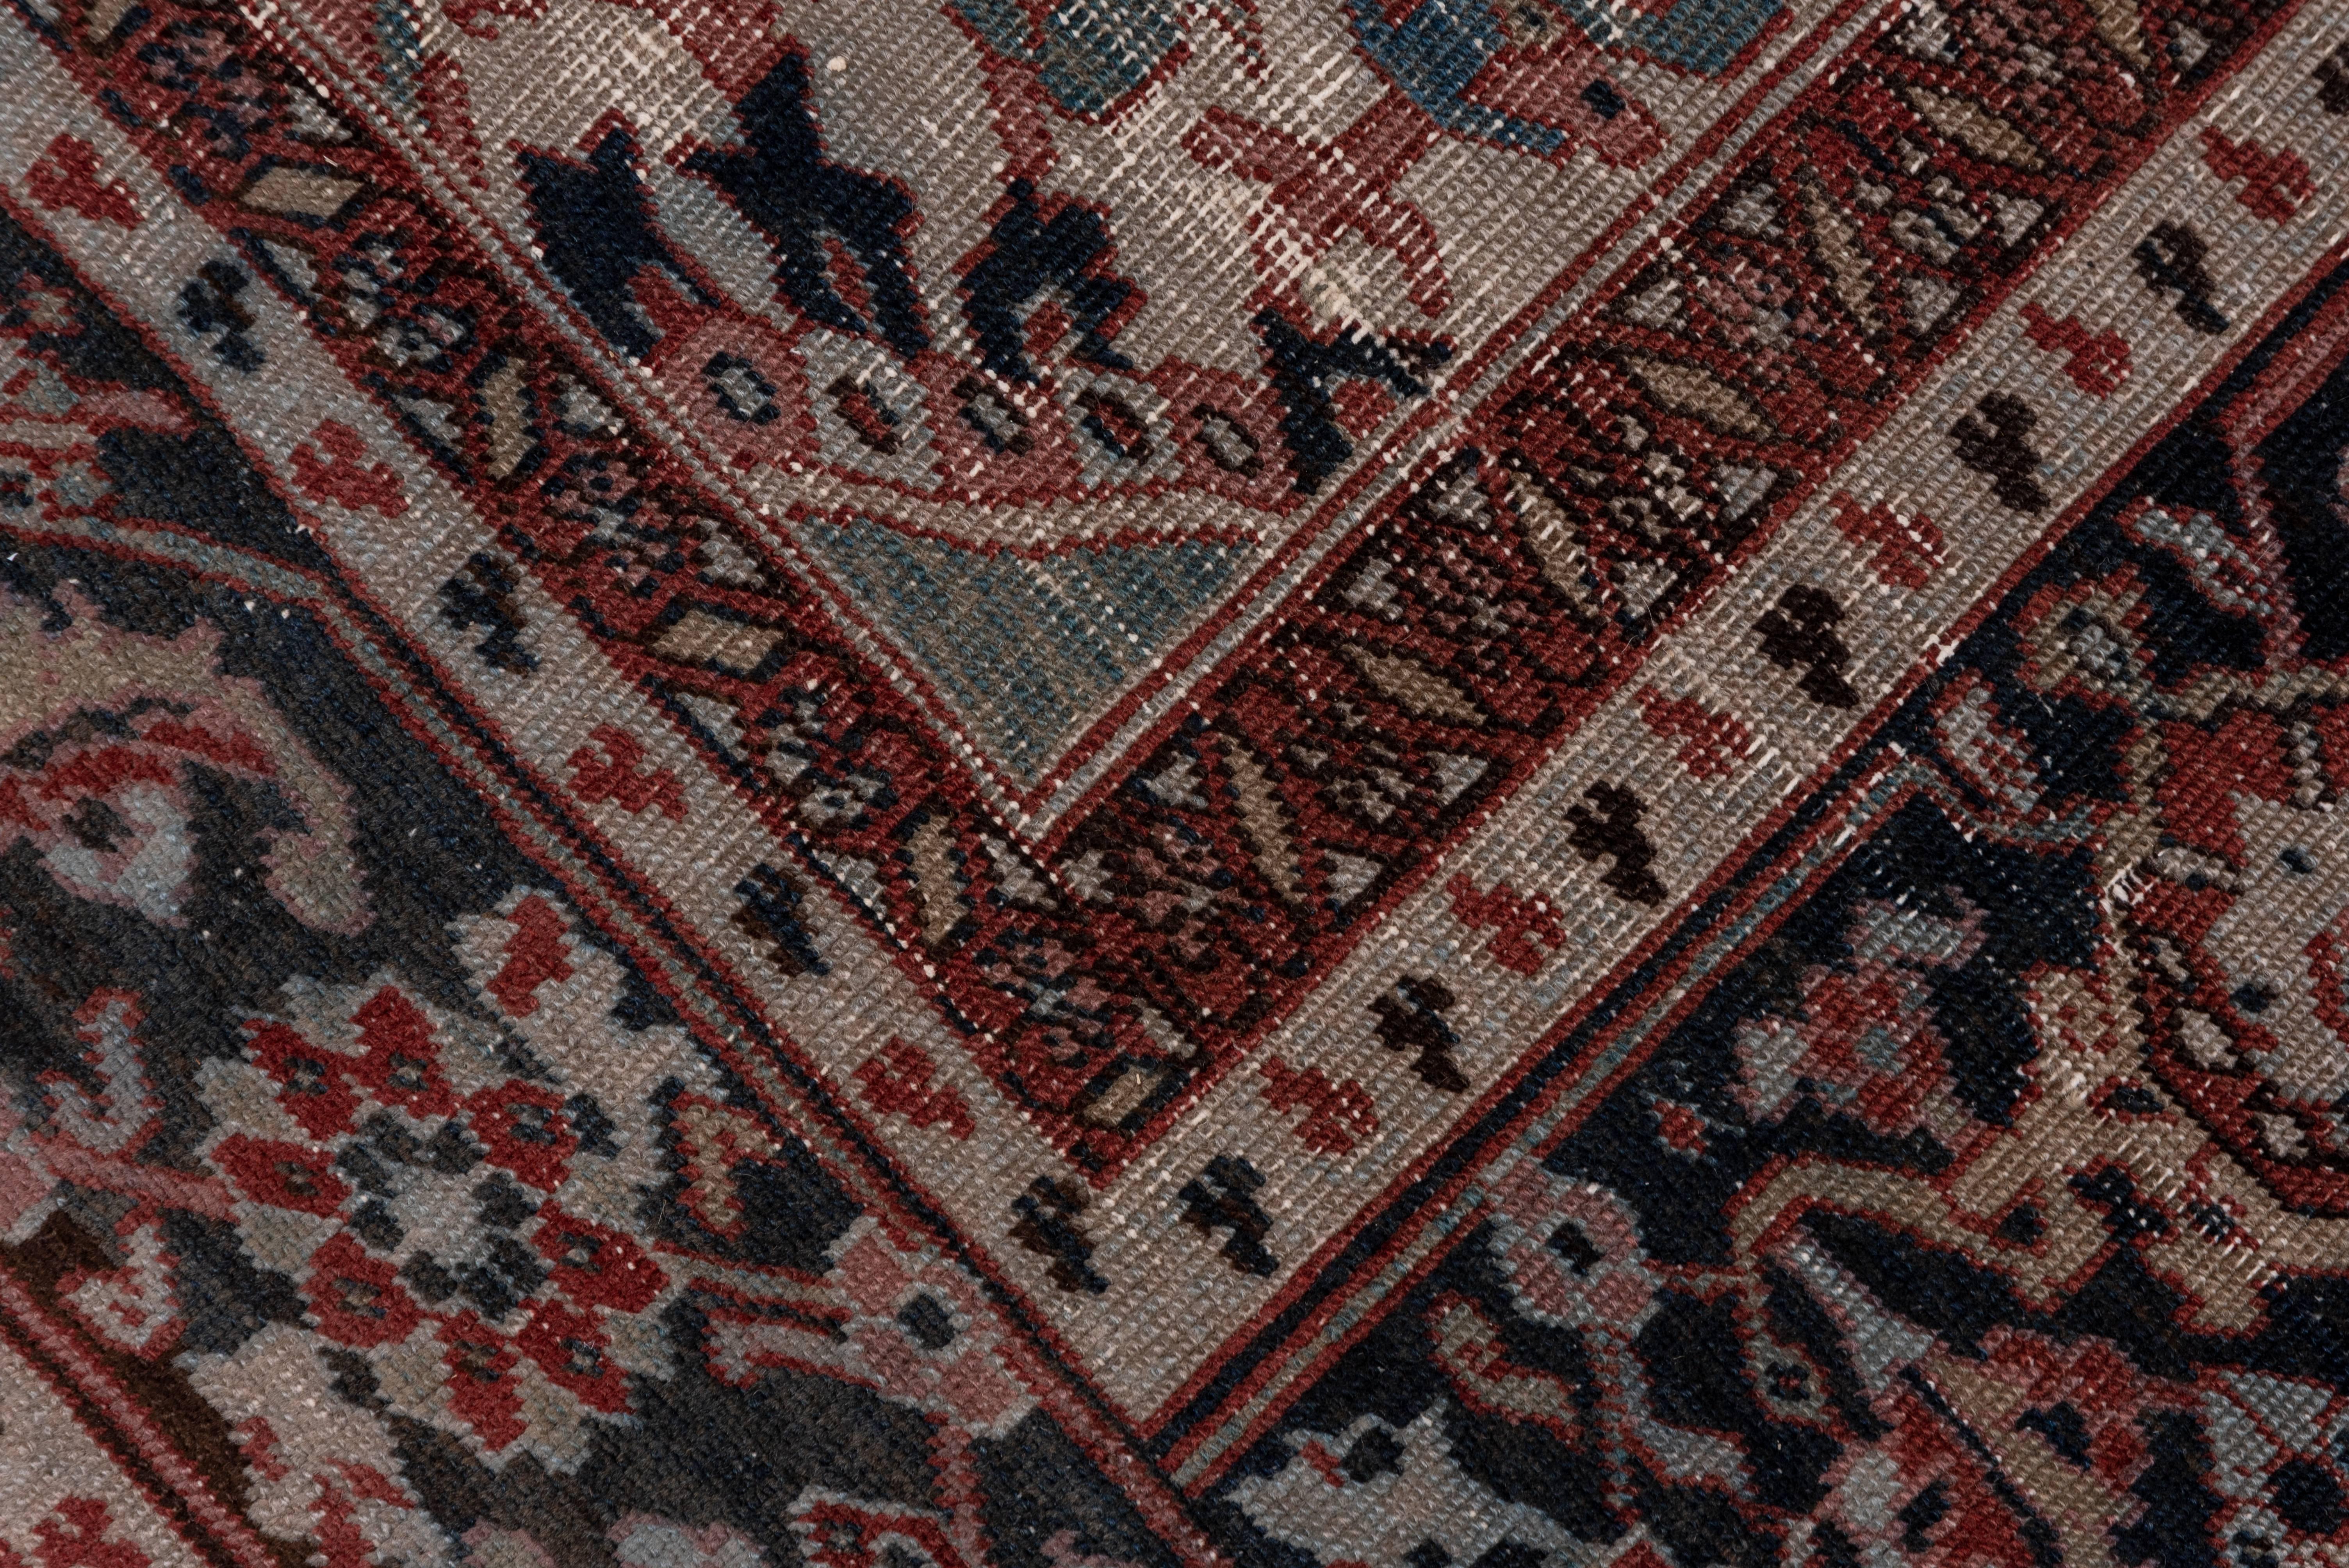 Antique Persian Heriz Carpet, Shabby Chic 1